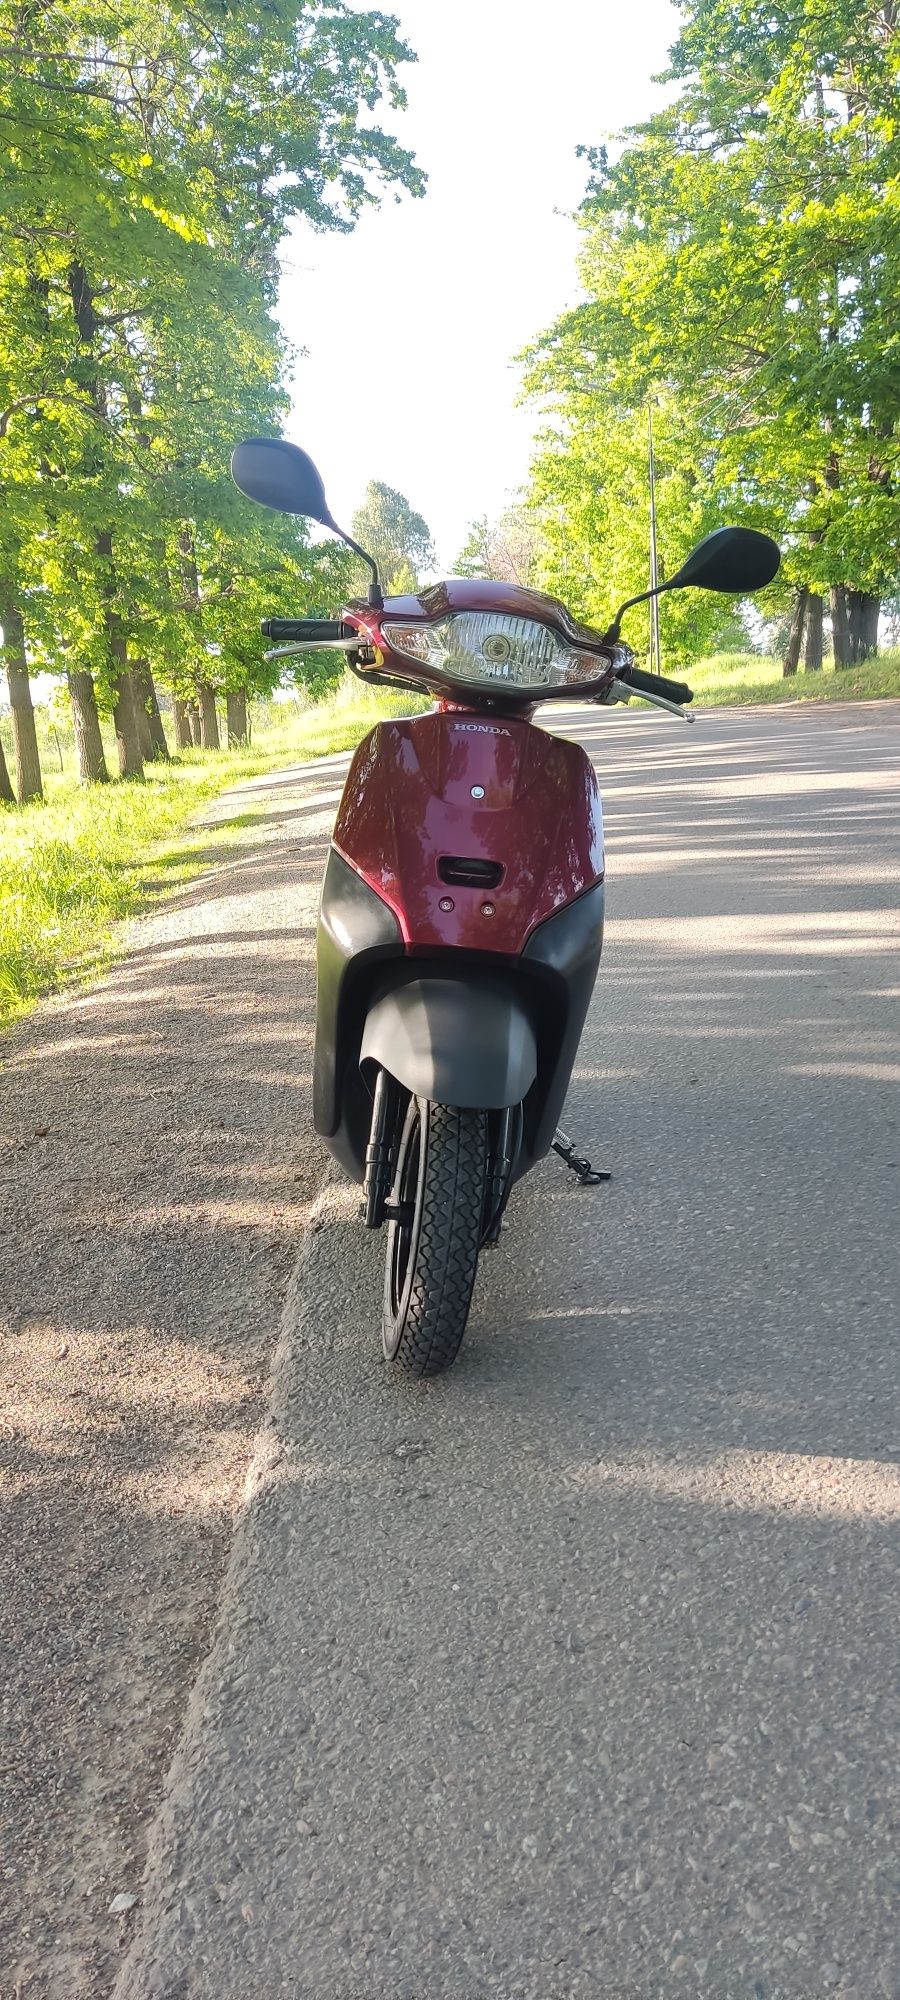 Honda Tact af79 scooter